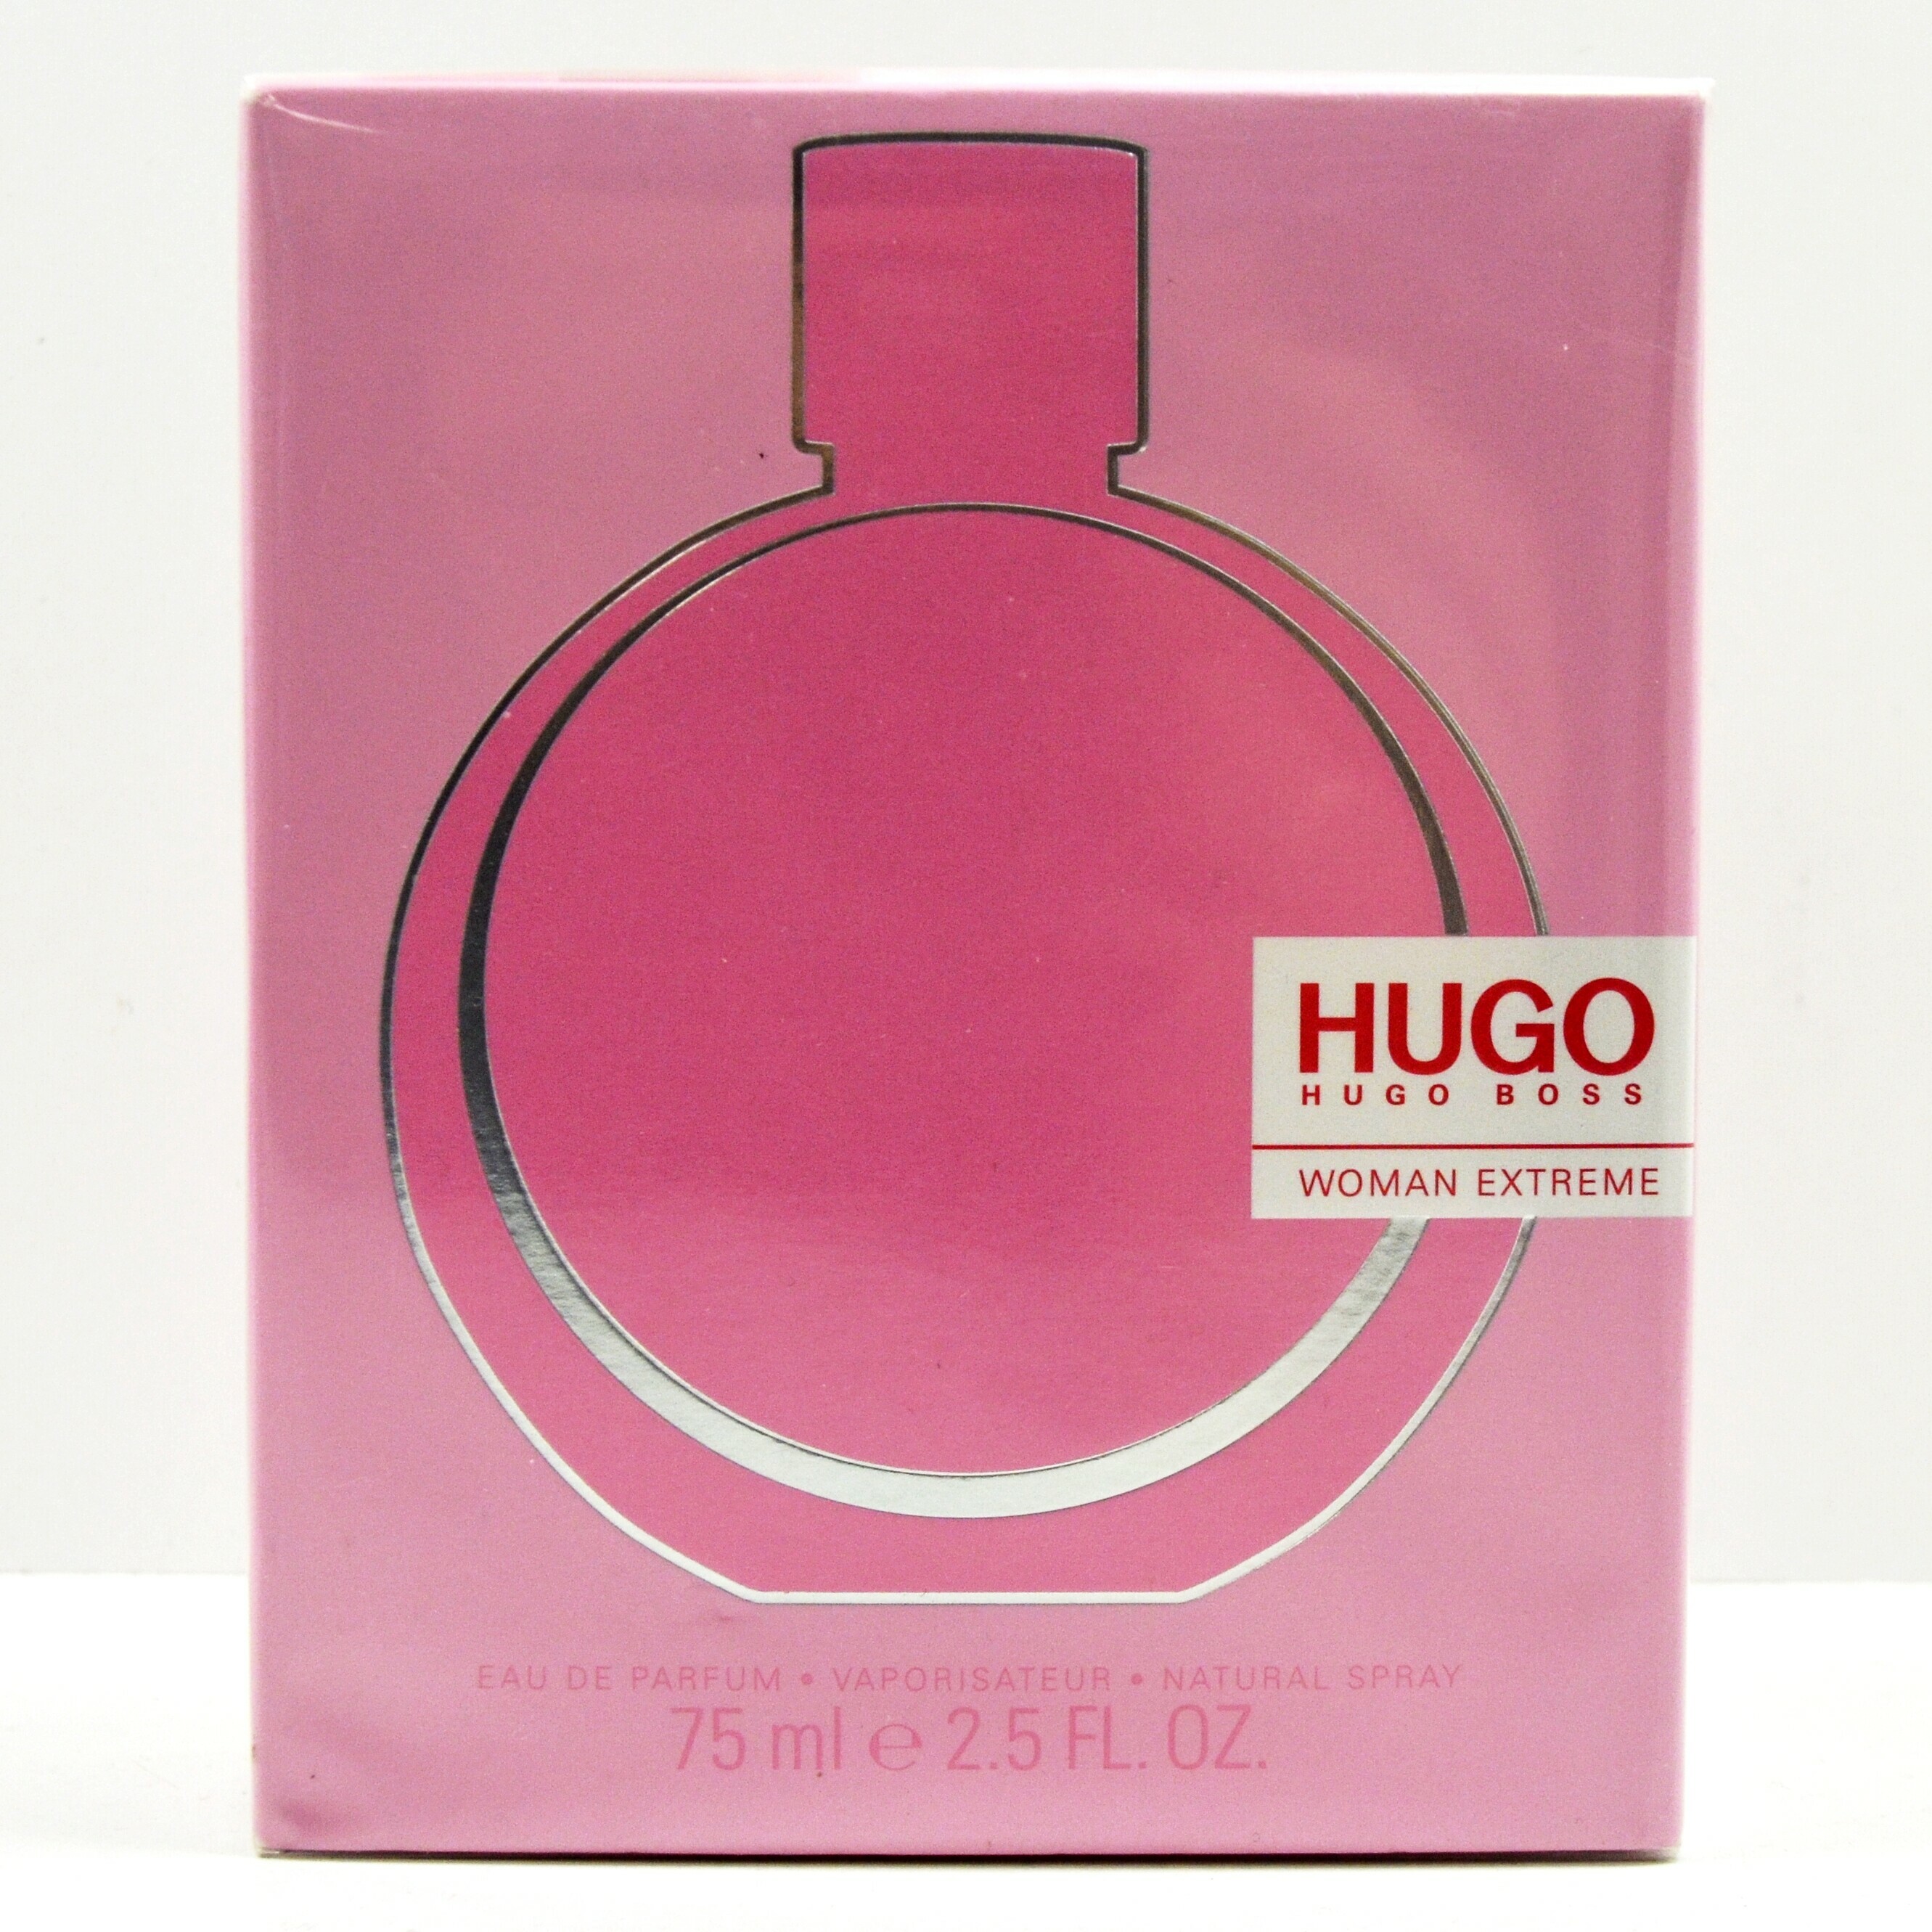 737052987569 - Hugo Boss Woman Extreme Eay De Parfum 75ml